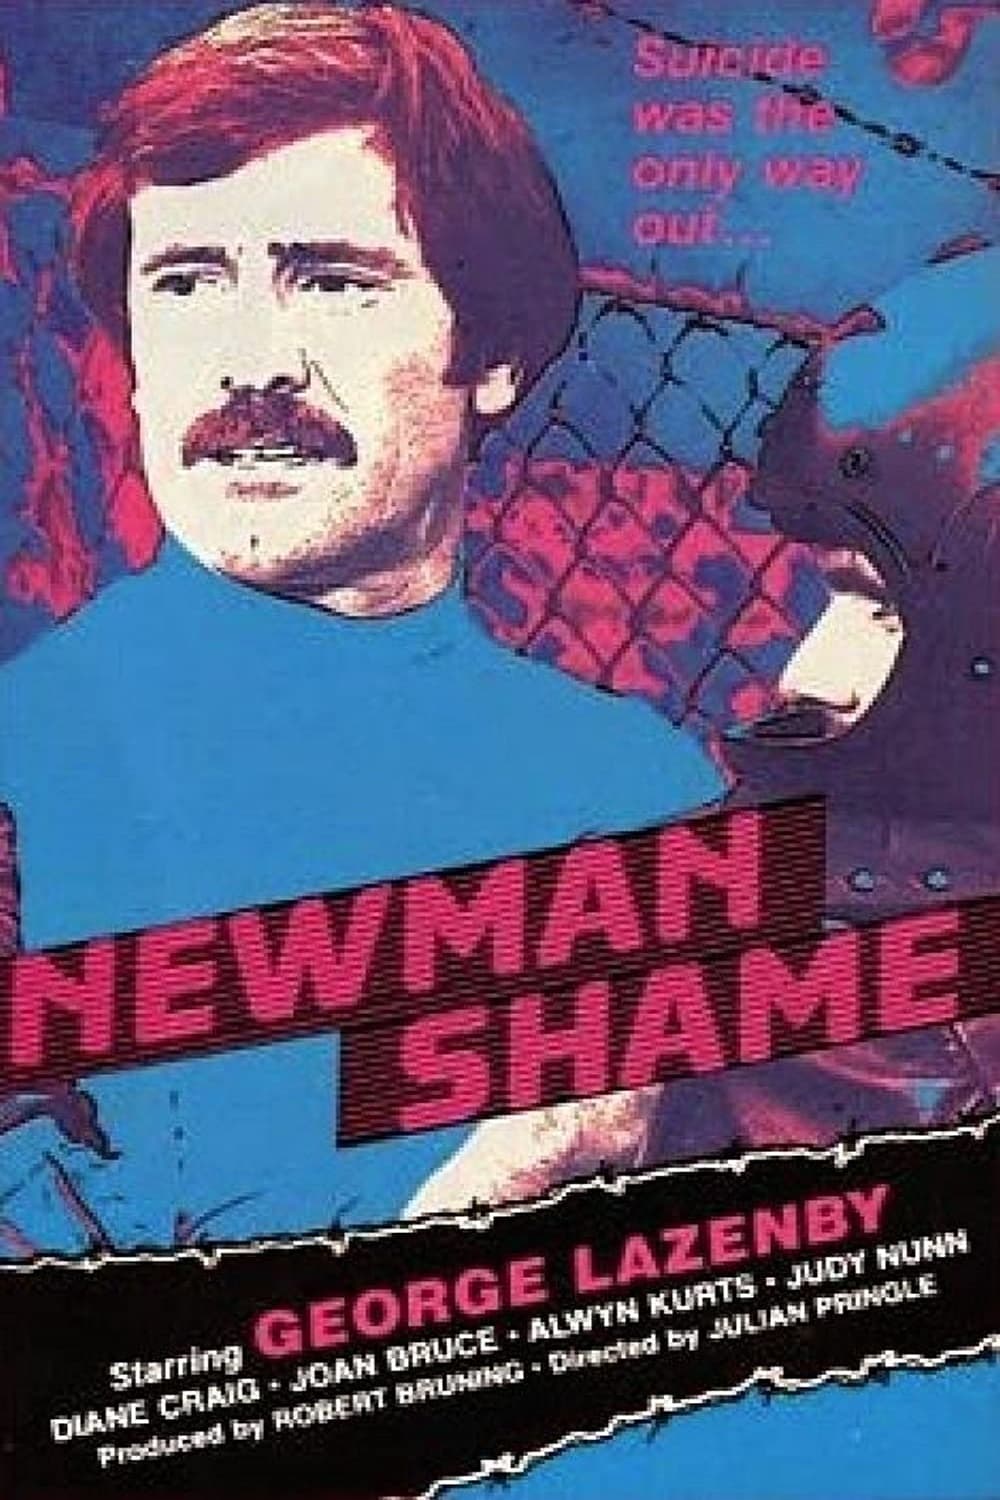 The Newman Shame film